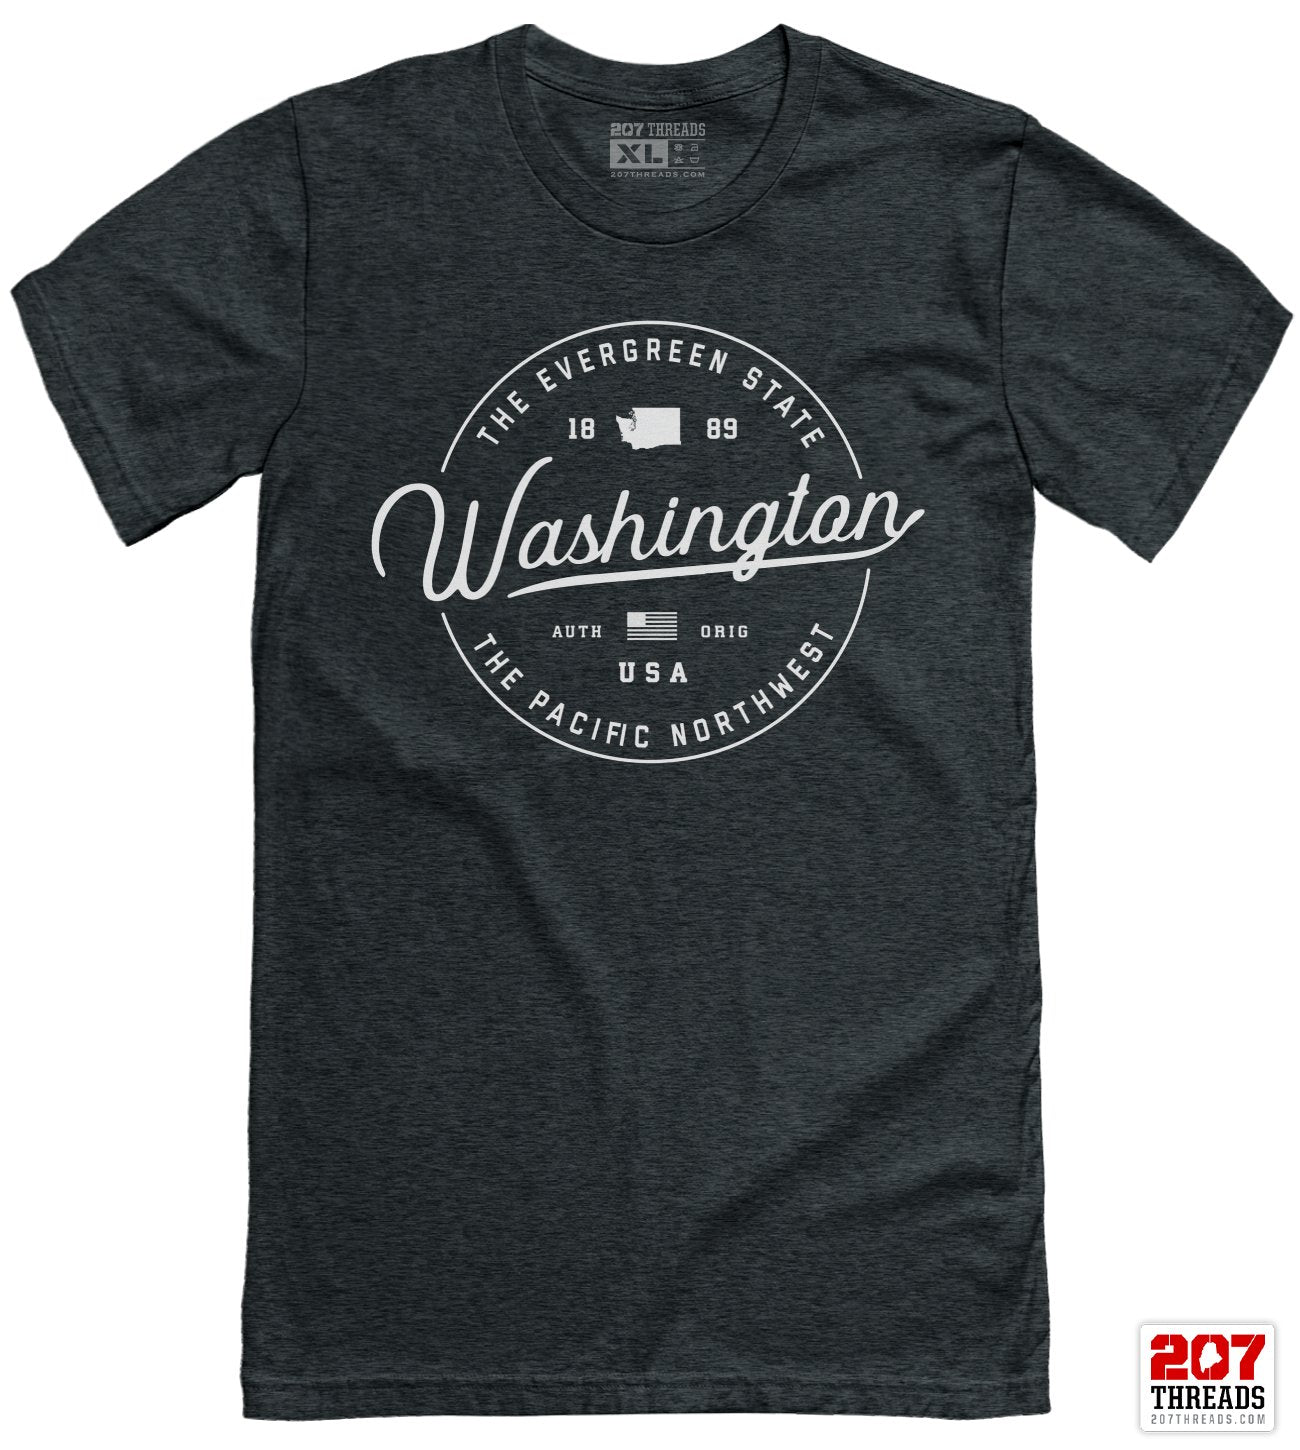 State of Washington T-Shirt - The Washington Vacation Tee